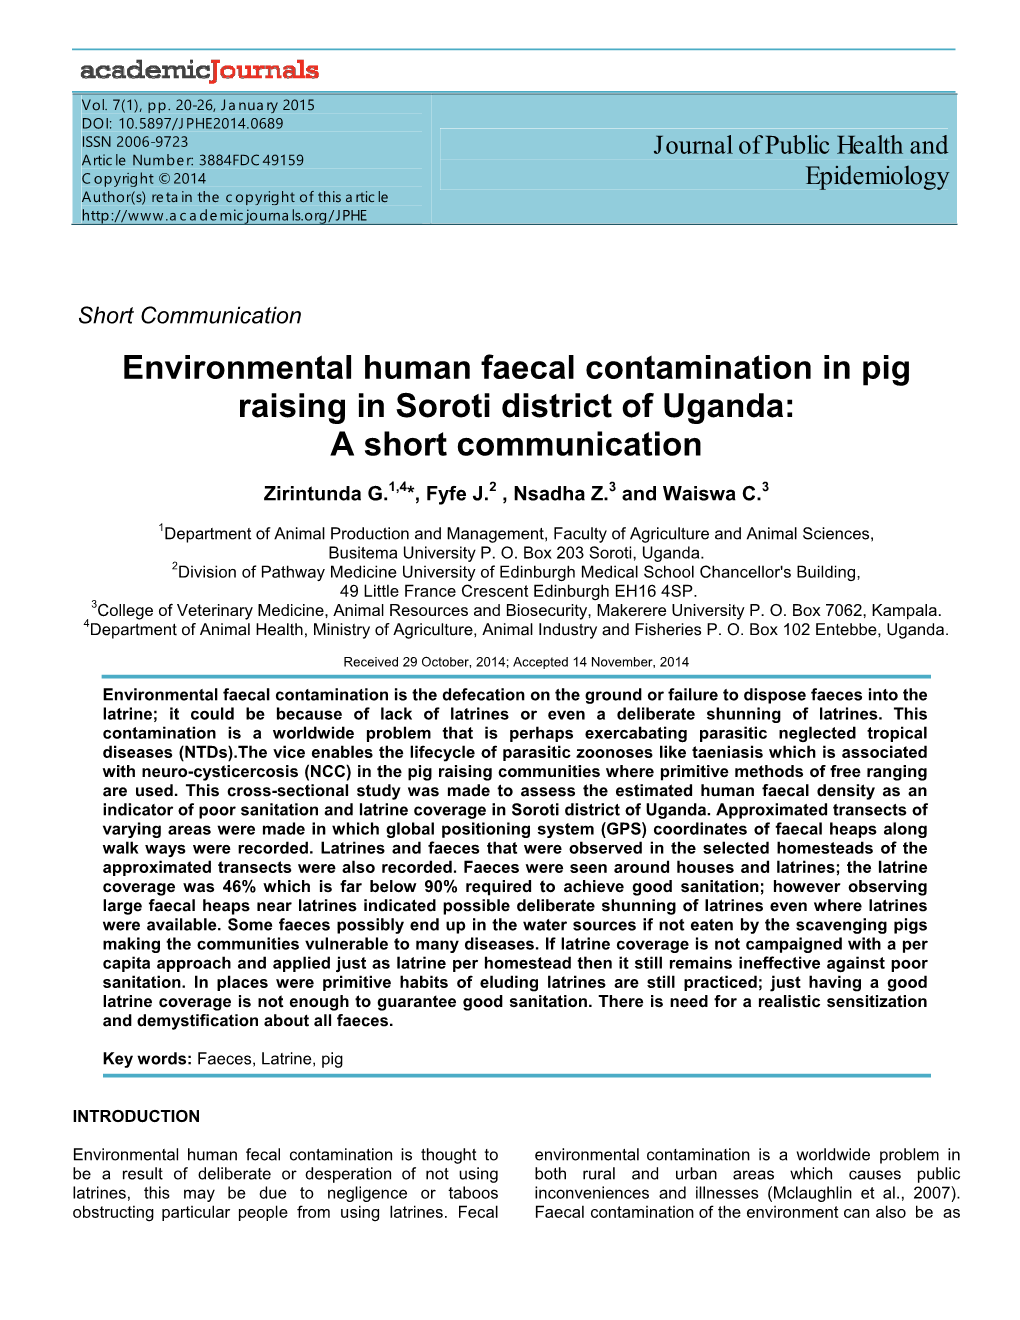 Environmental Human Faecal Contamination in Pig Raising in Soroti District of Uganda: a Short Communication